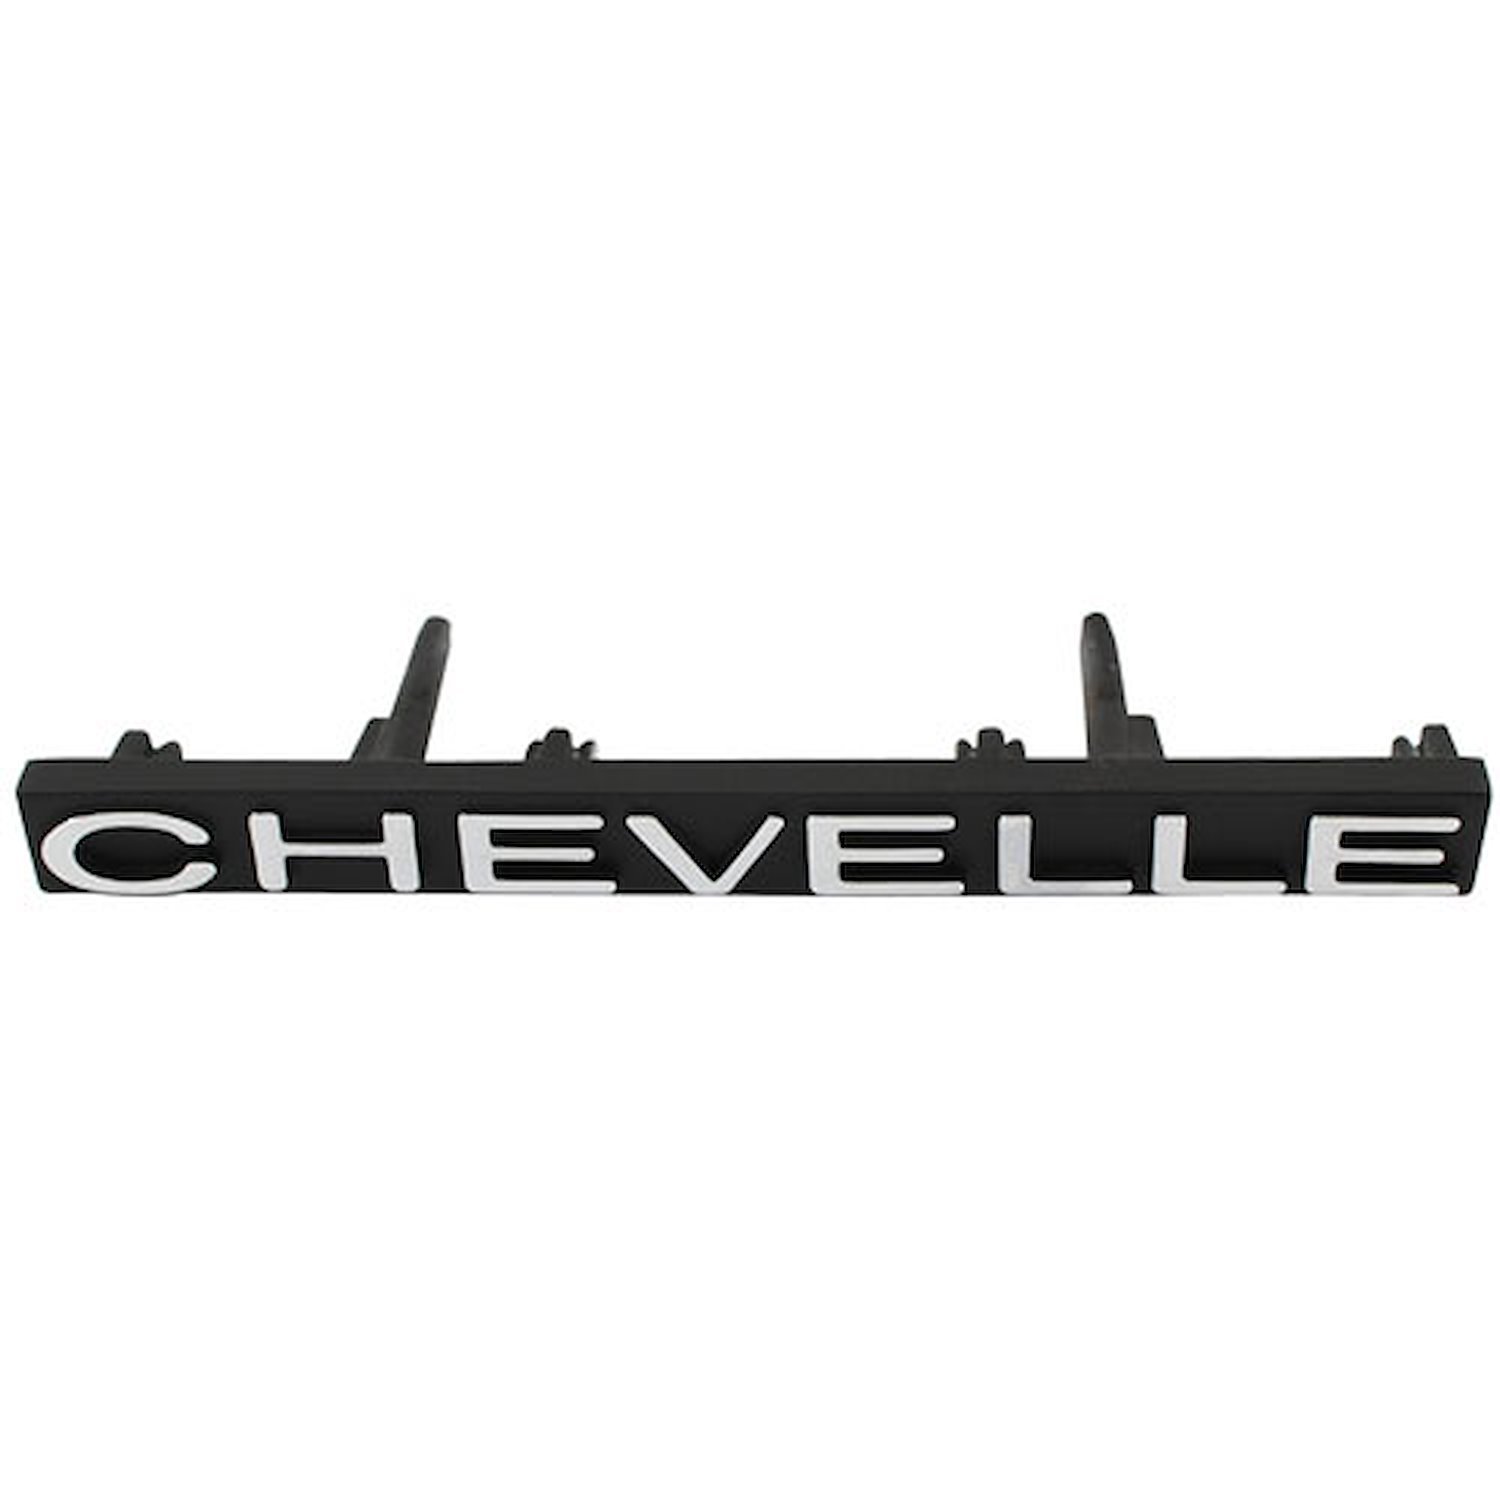 Grille Emblem 1971 Chevy Chevelle